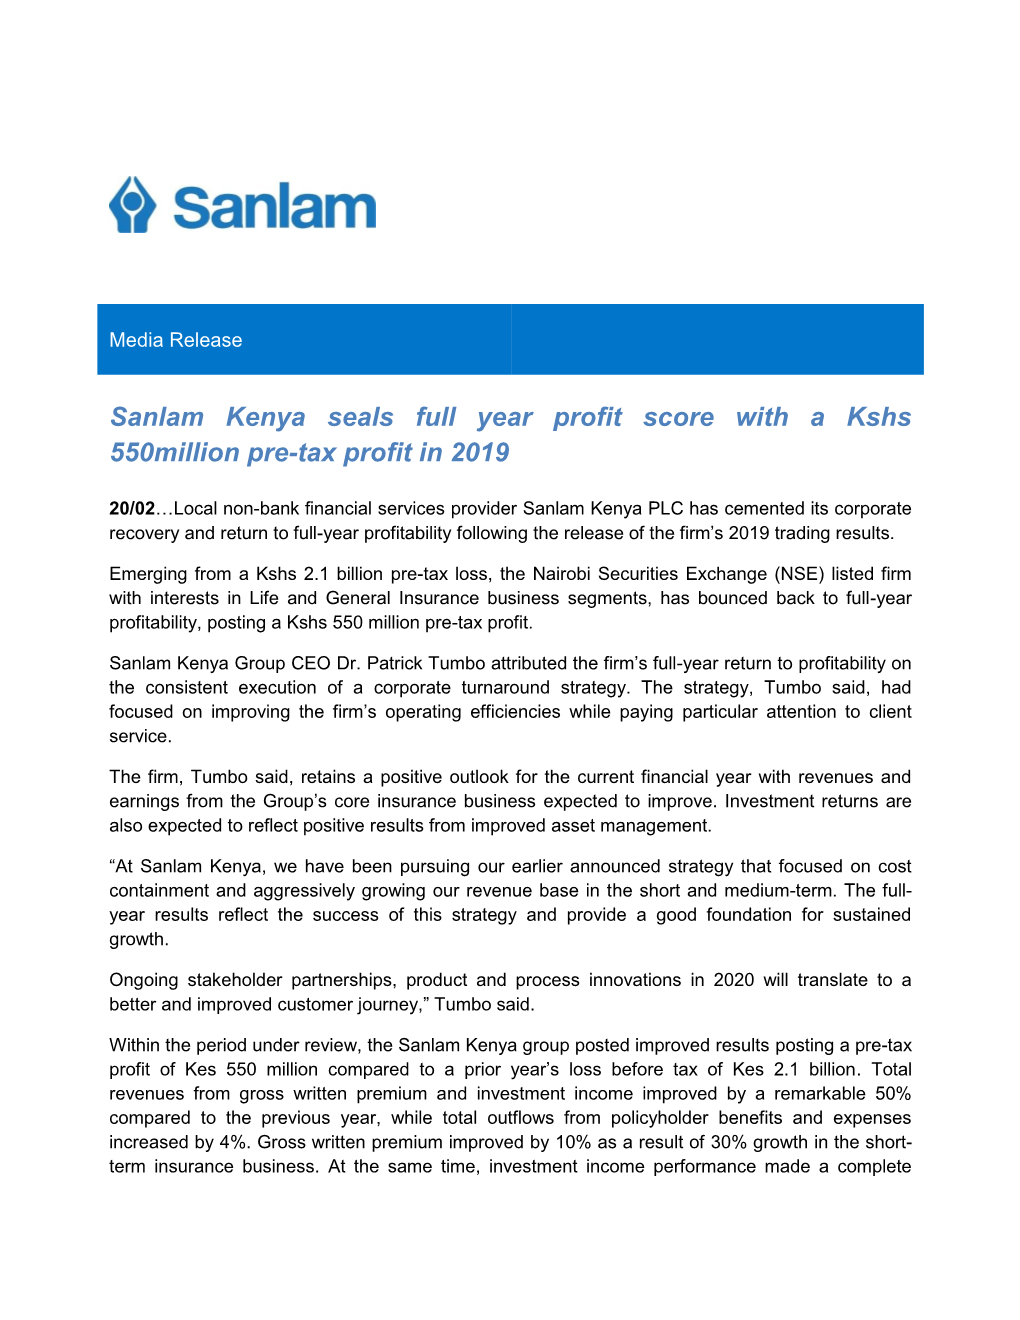 Sanlam Kenya Seals Full Year Profit Score with a Kshs 550Million Pre-Tax Profit in 2019